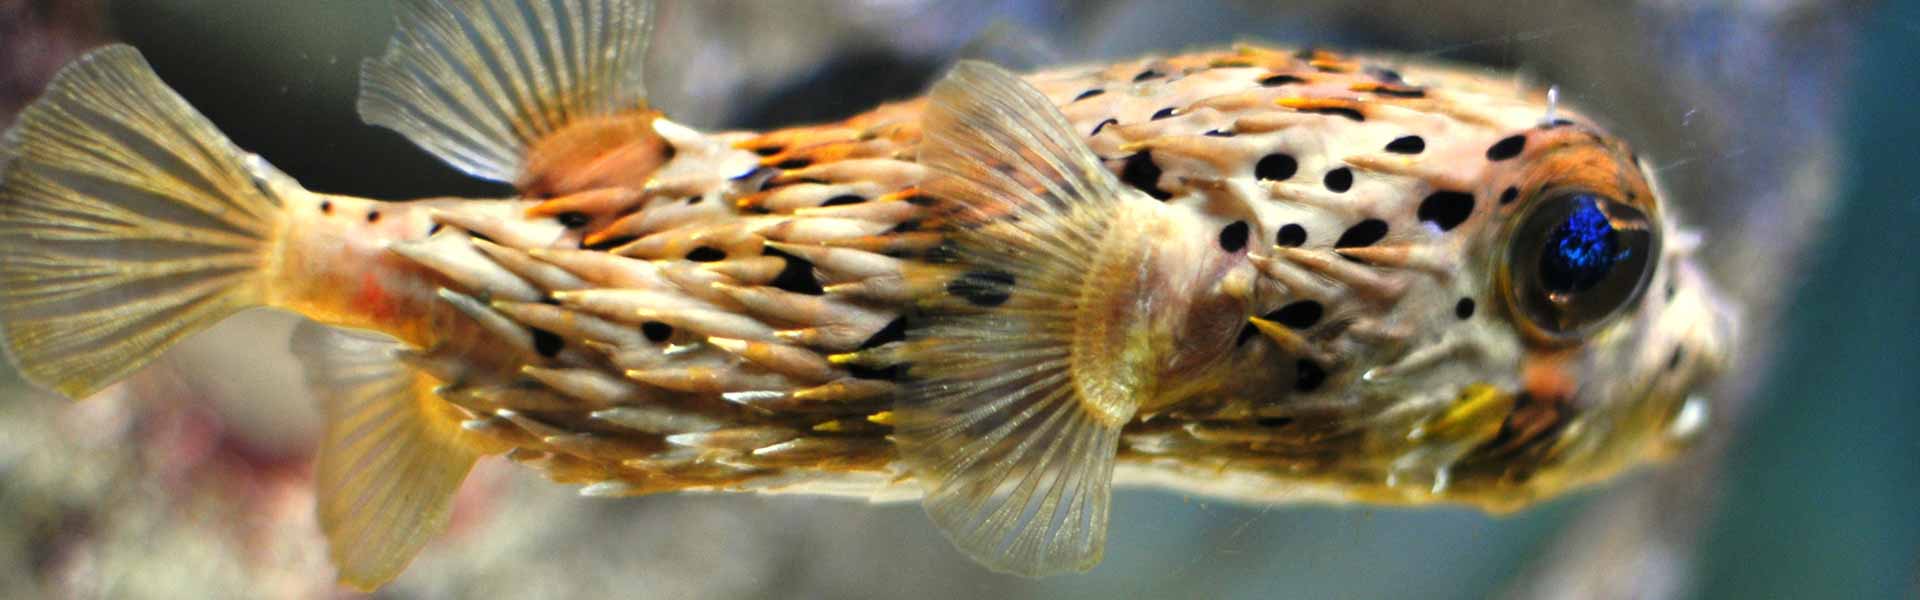 The Puffed-Up Pufferfish